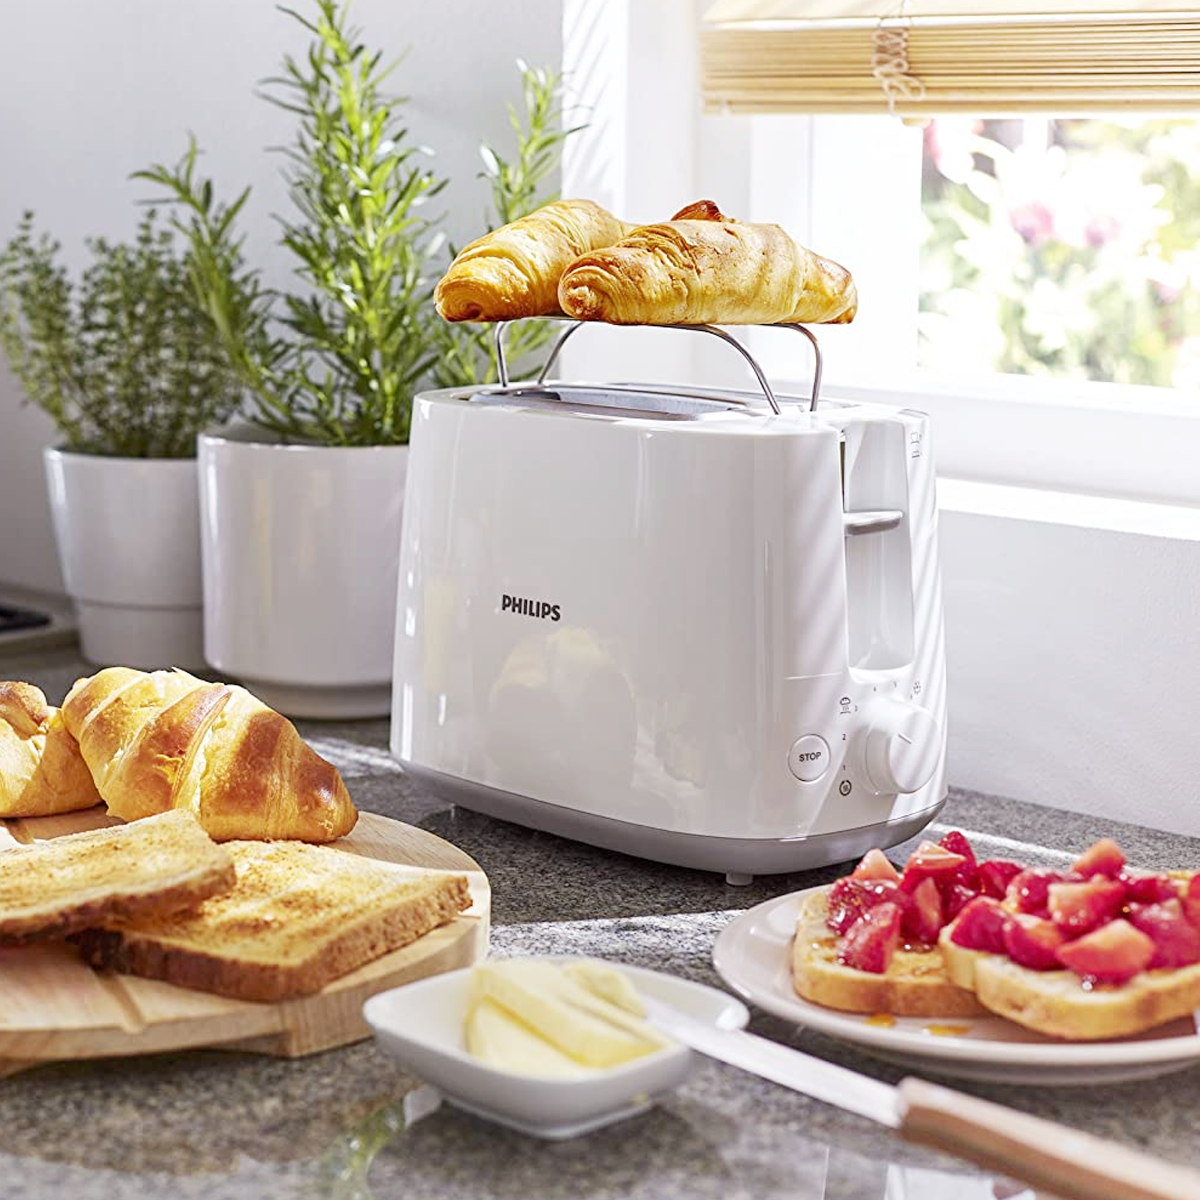 Philips Bread Toaster